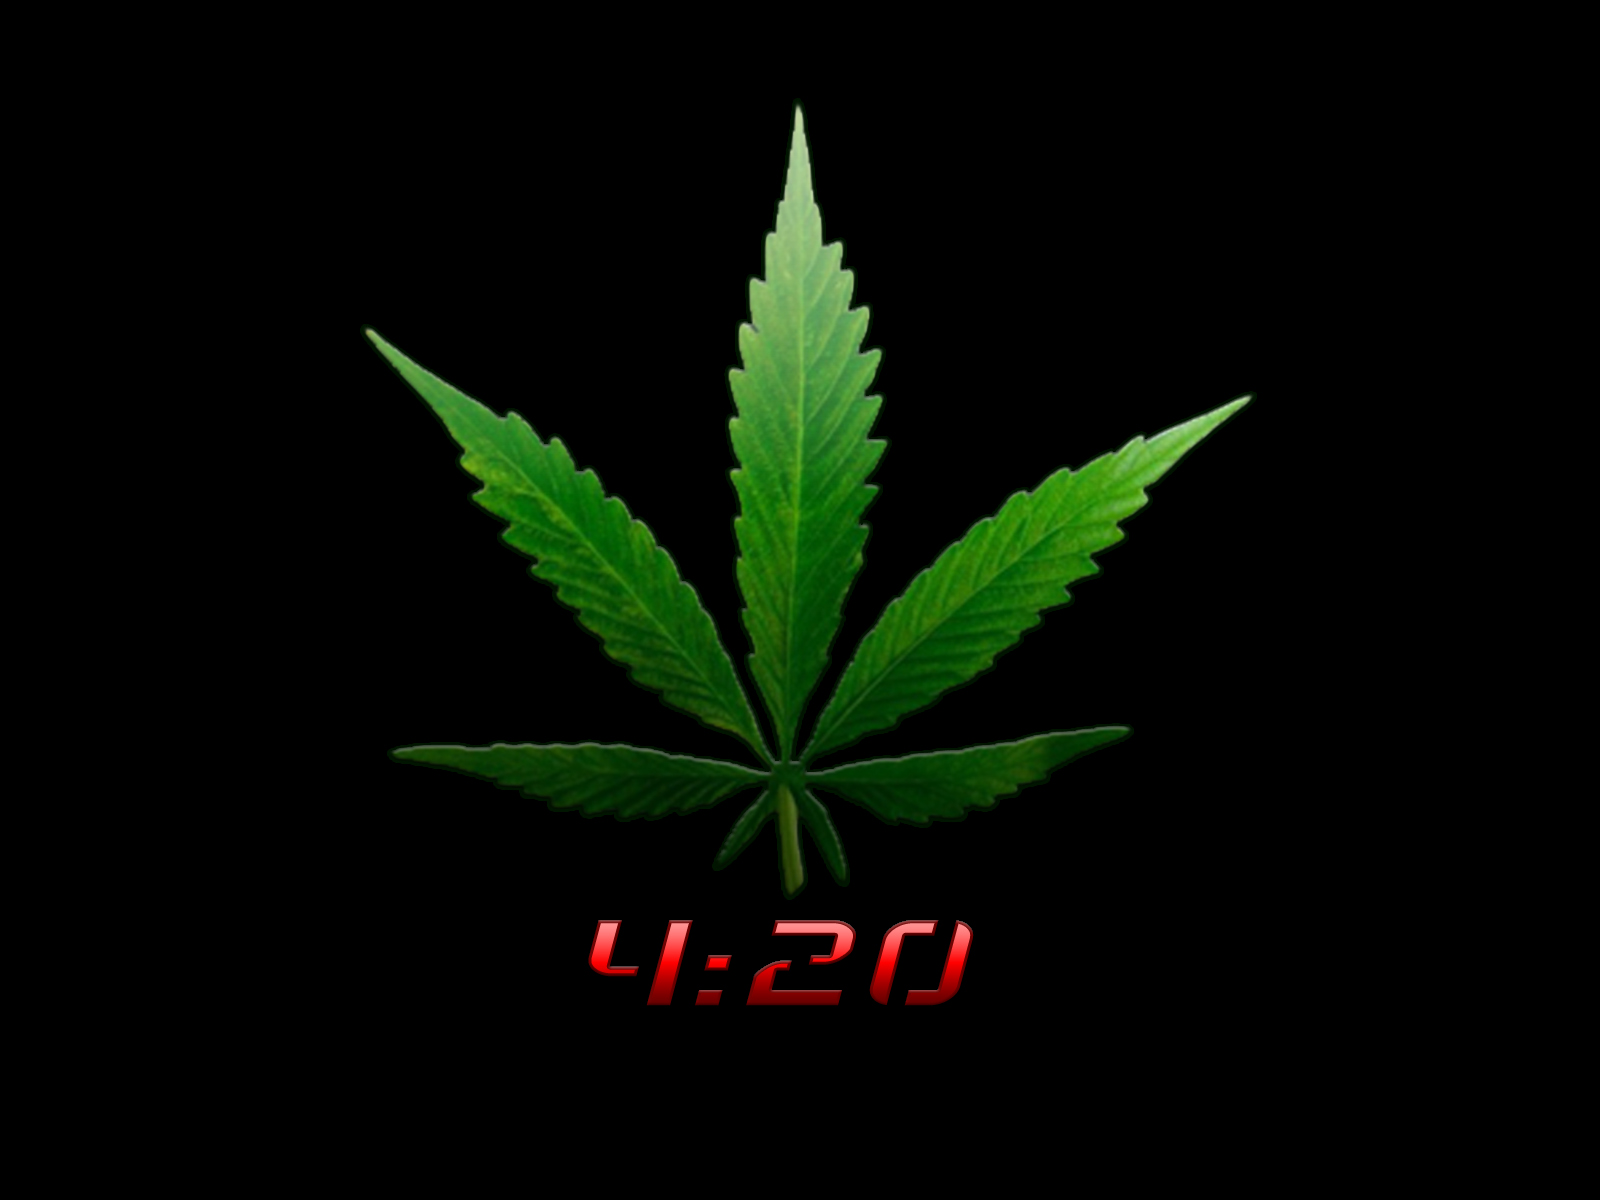 marijuana 420 wallpaper